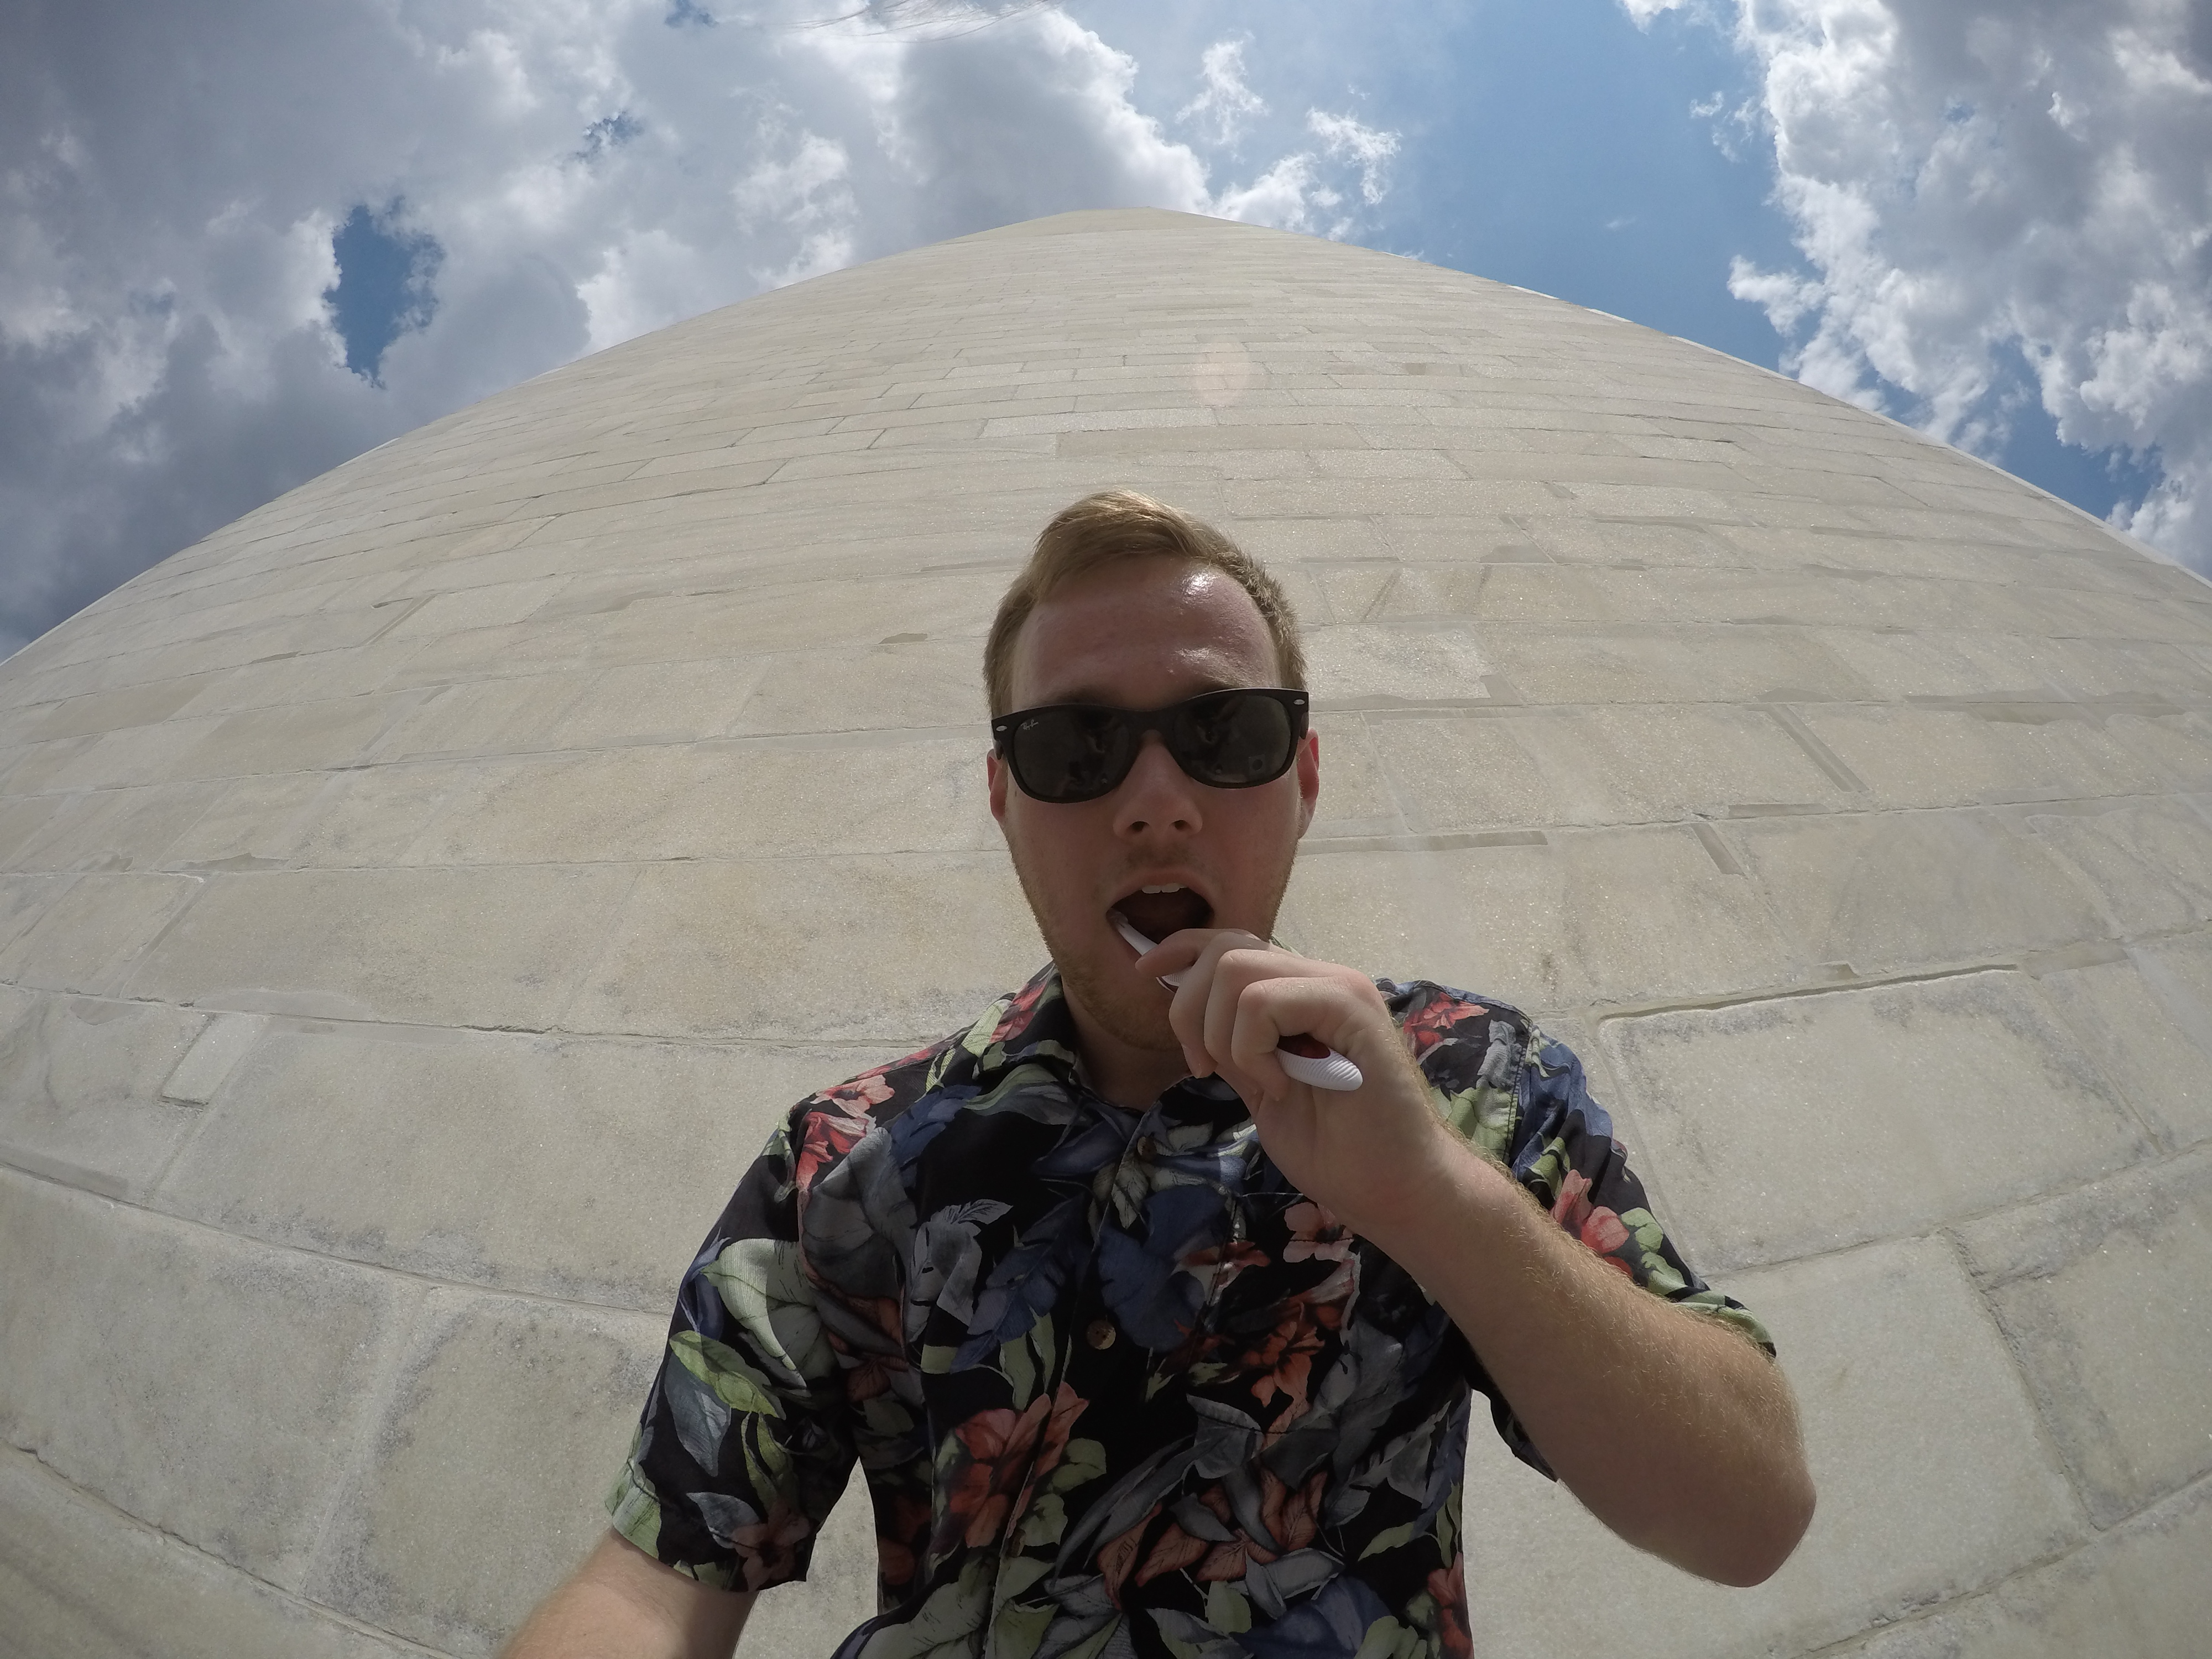 Toothbrush Challenge at the Washington Monument